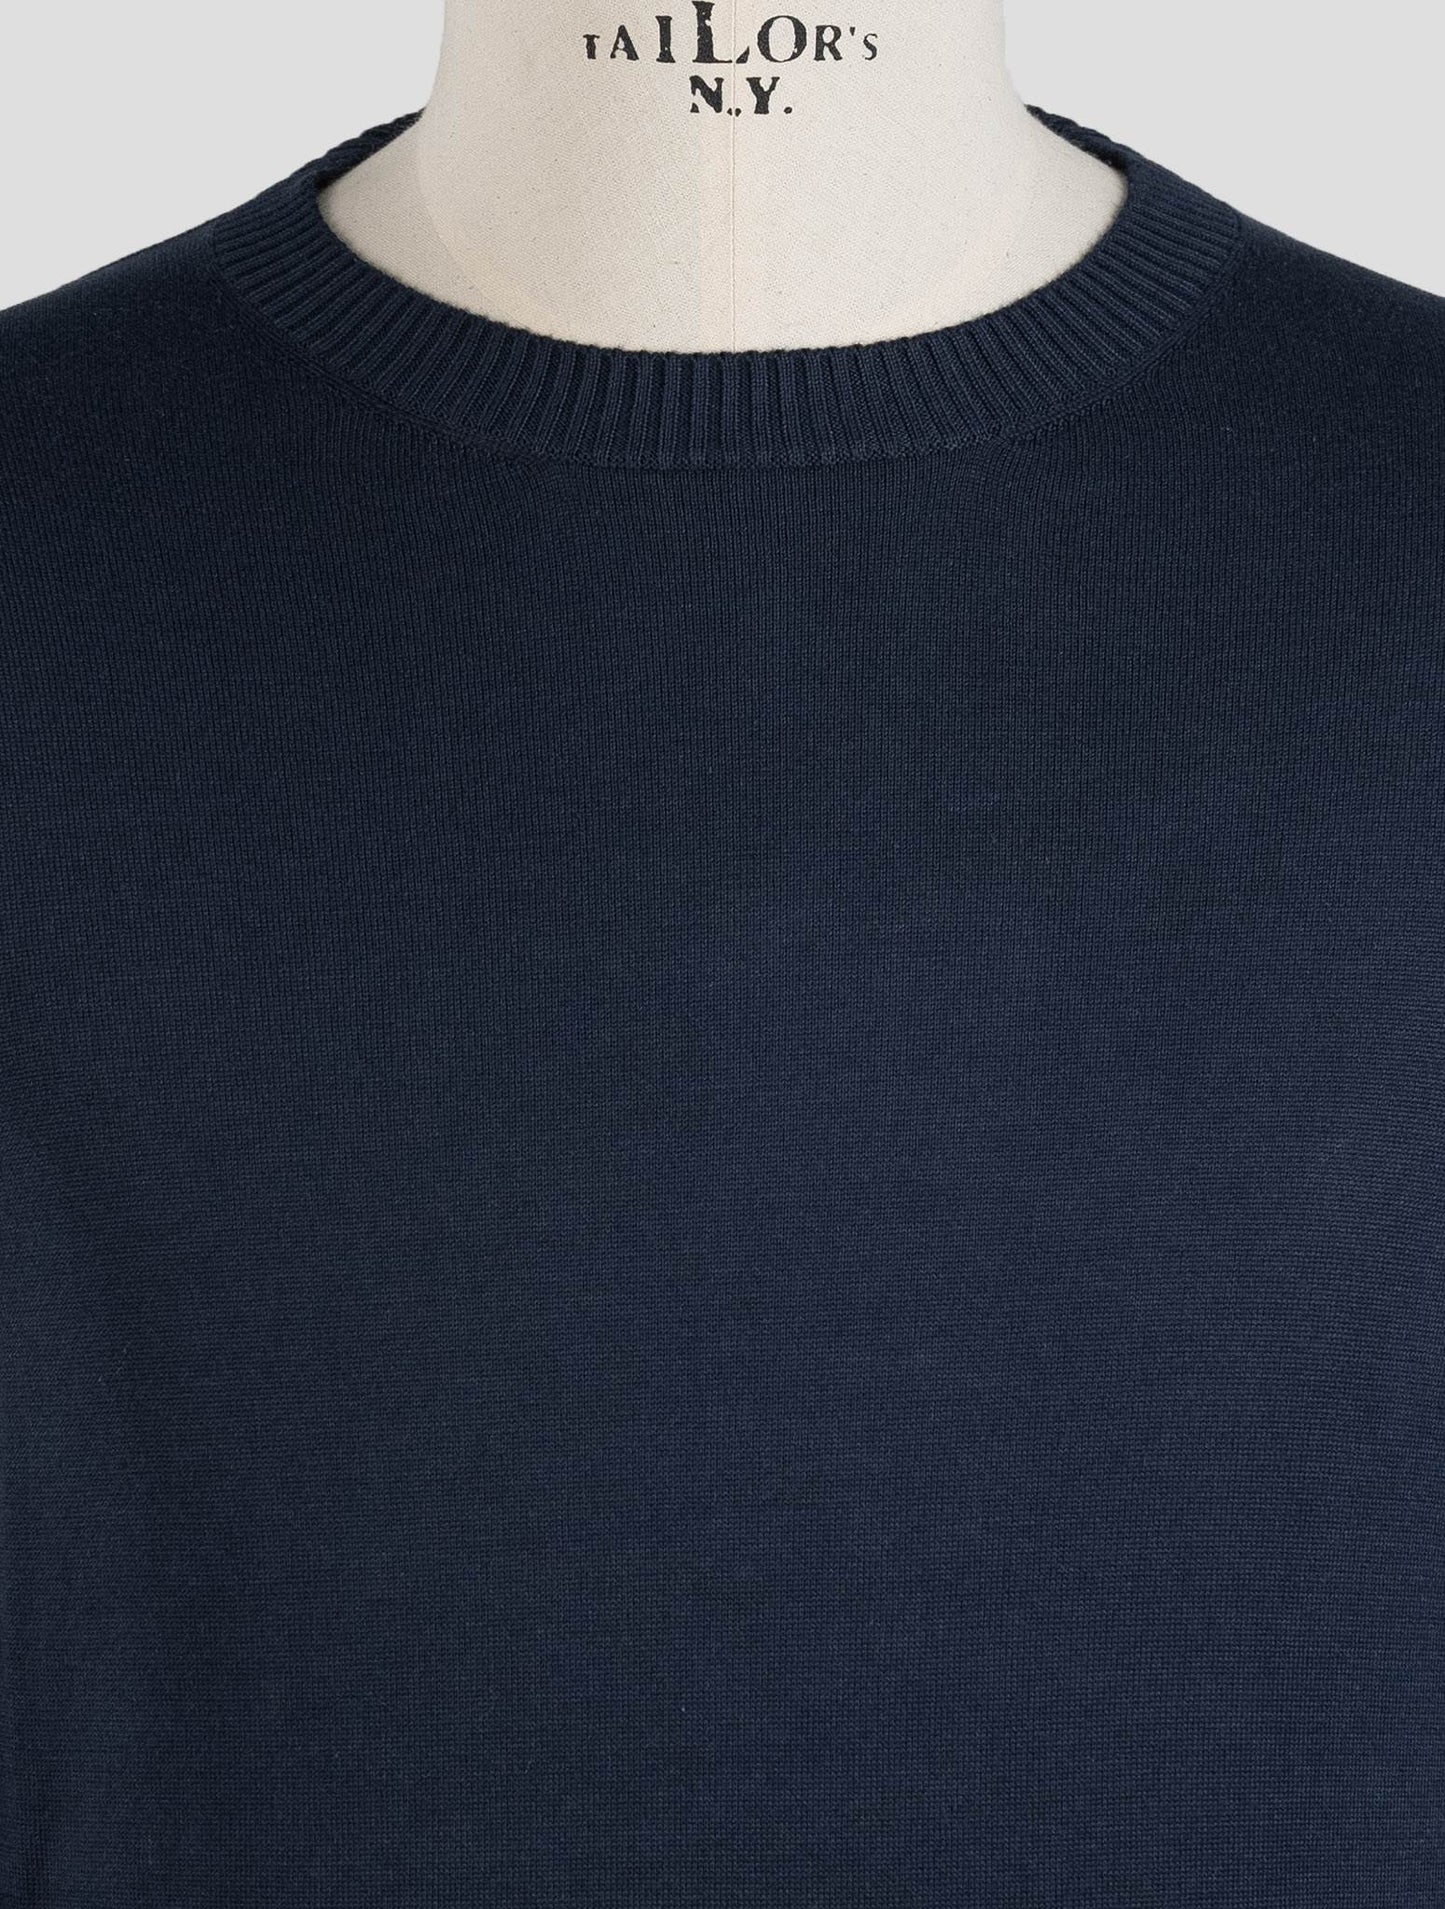 Malo Blue Navy Cotton Sweater Crewneck